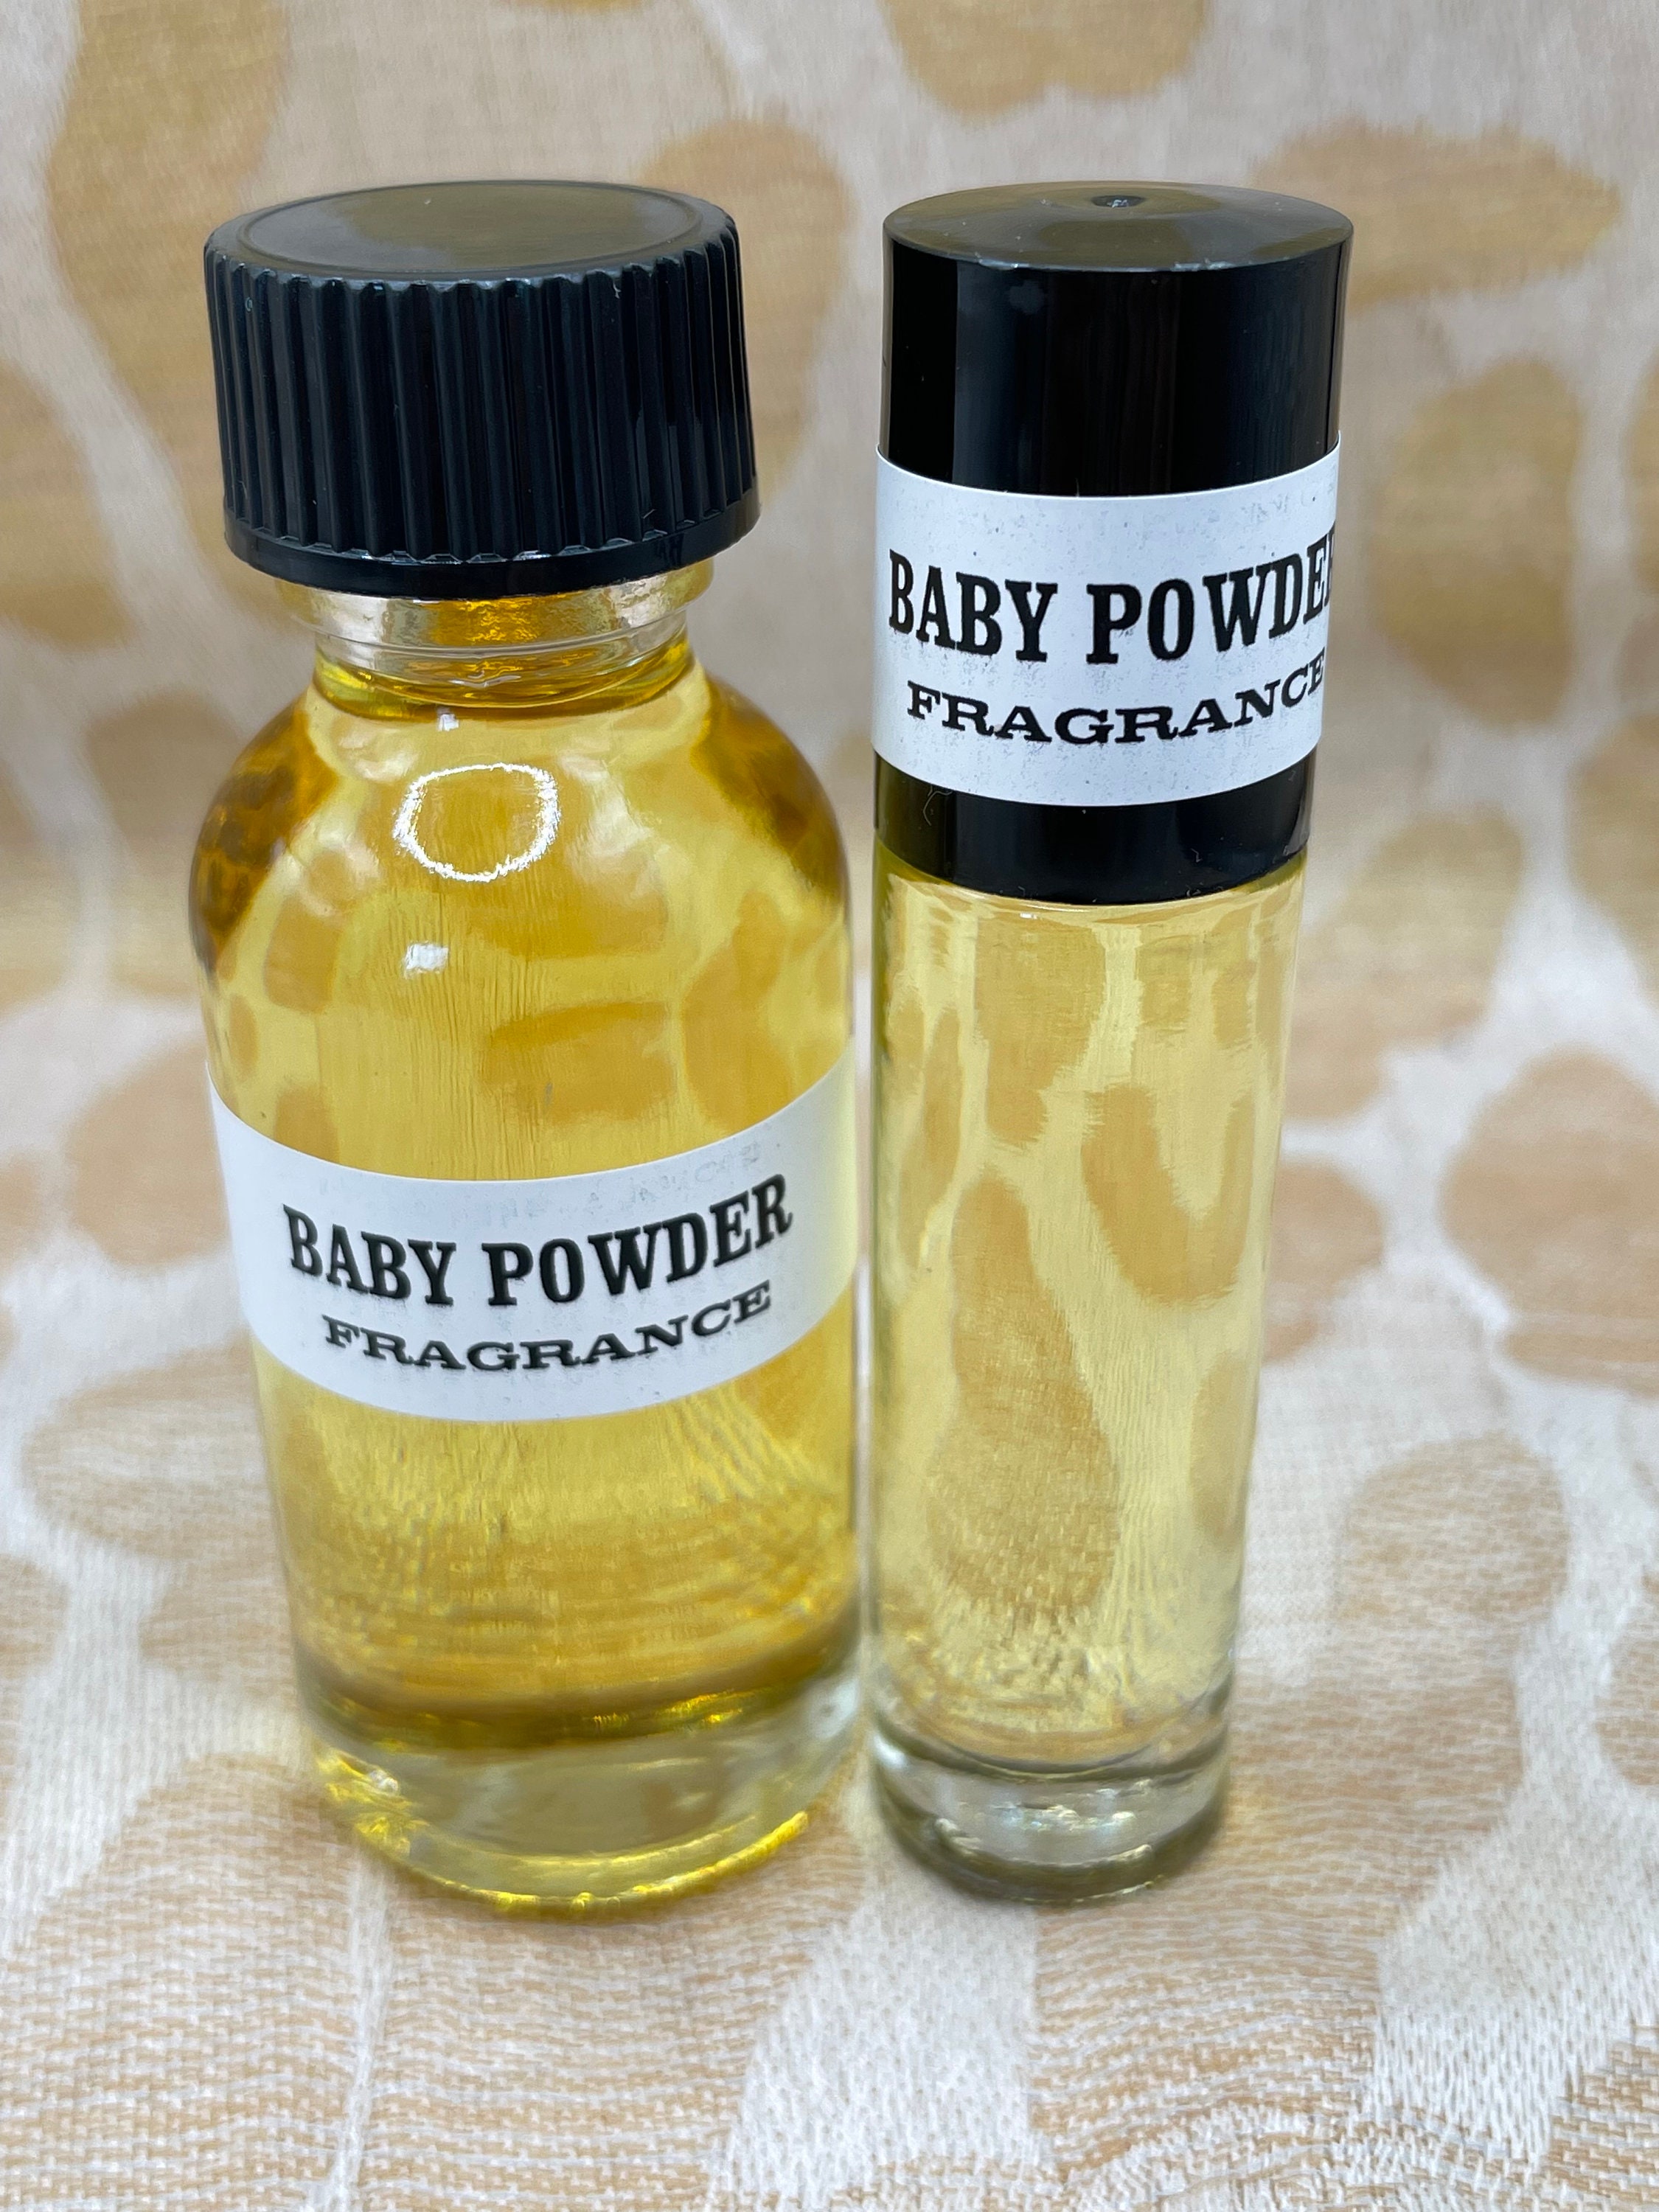 Baby Powder Perfume Oil – Bassillia